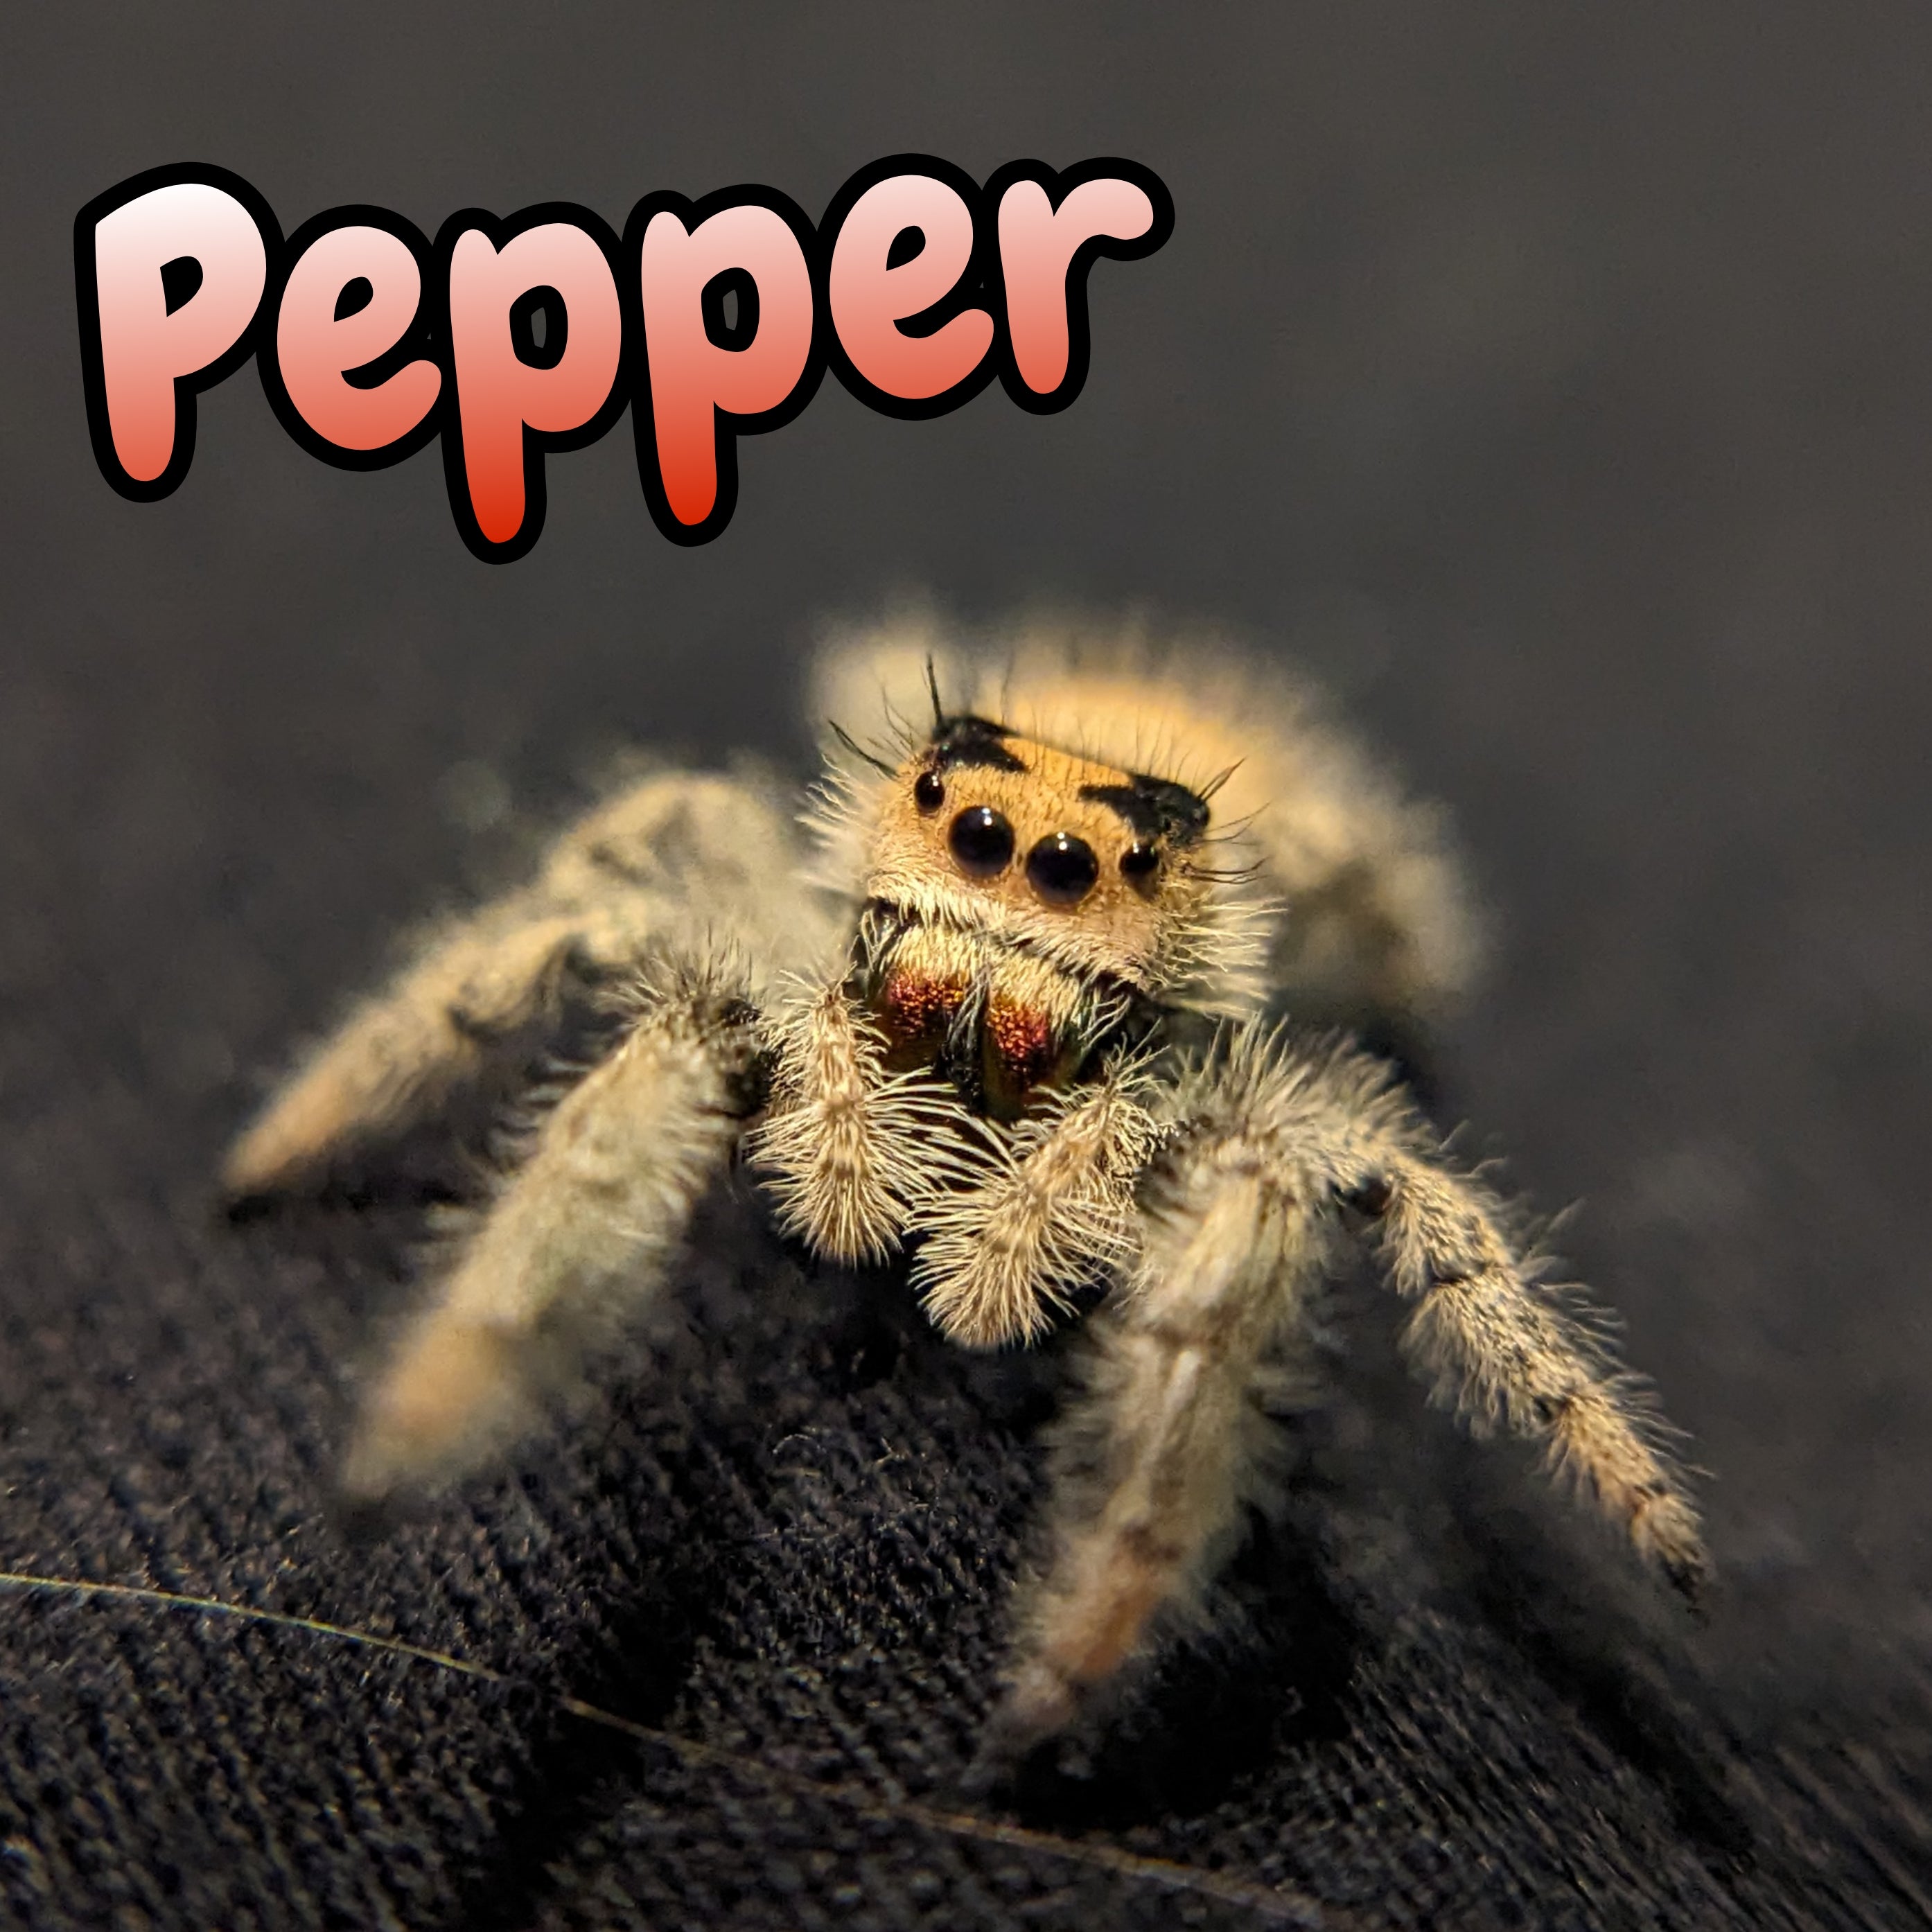 Regal Jumping Spider "Pepper"